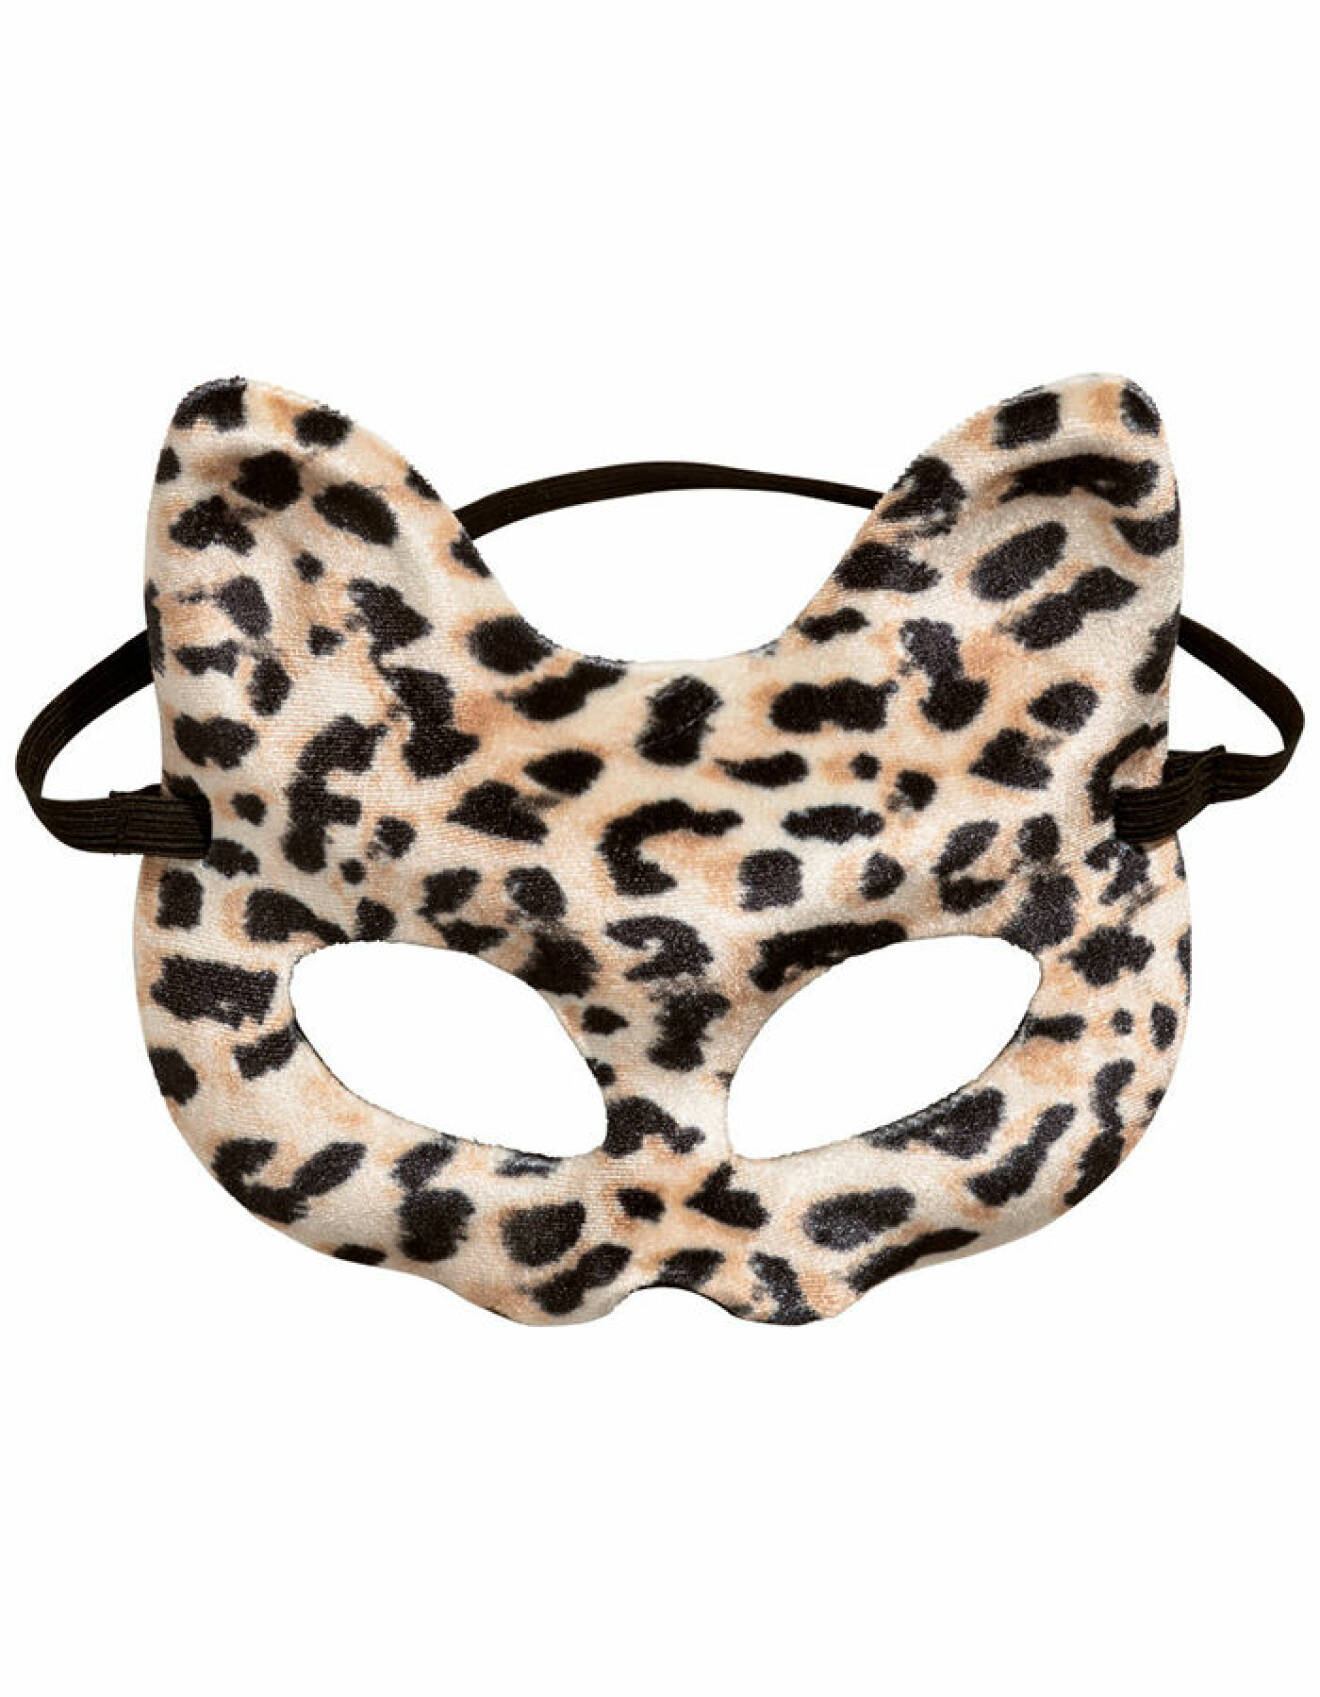 Leopardmask från H&M.